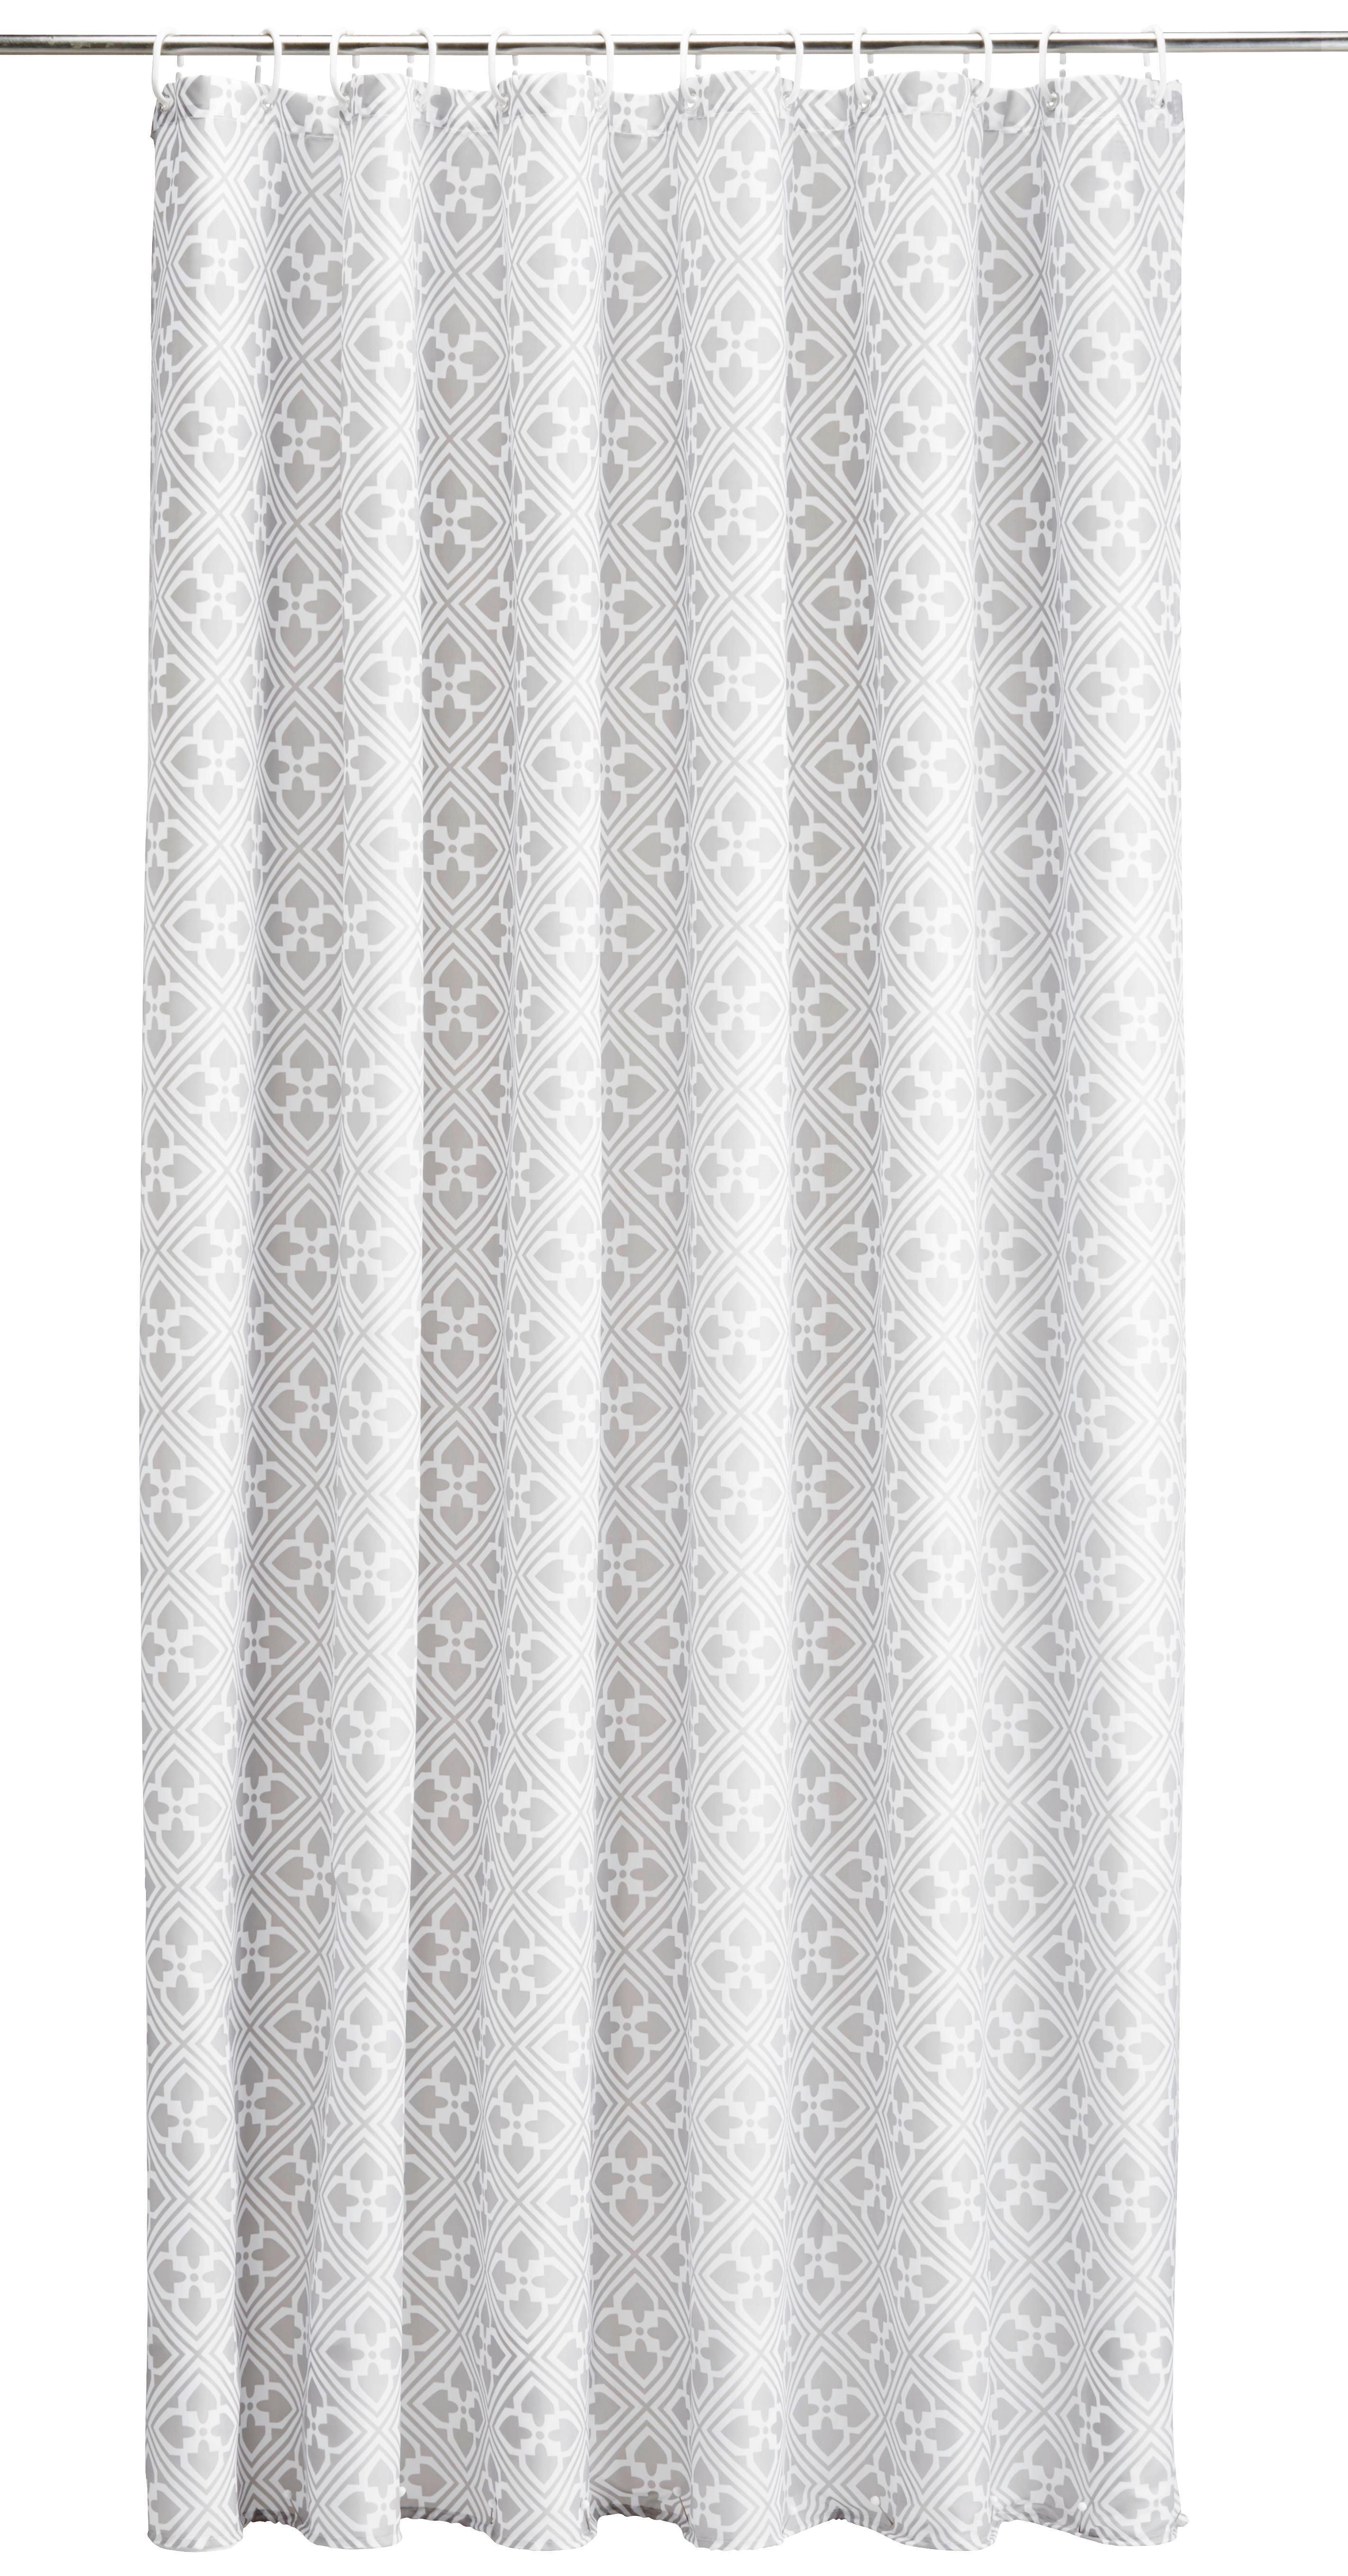 Duschvorhang Spain ca. 180x200cm - Hellgrau/Weiß, LIFESTYLE, Textil (180/200cm) - Modern Living